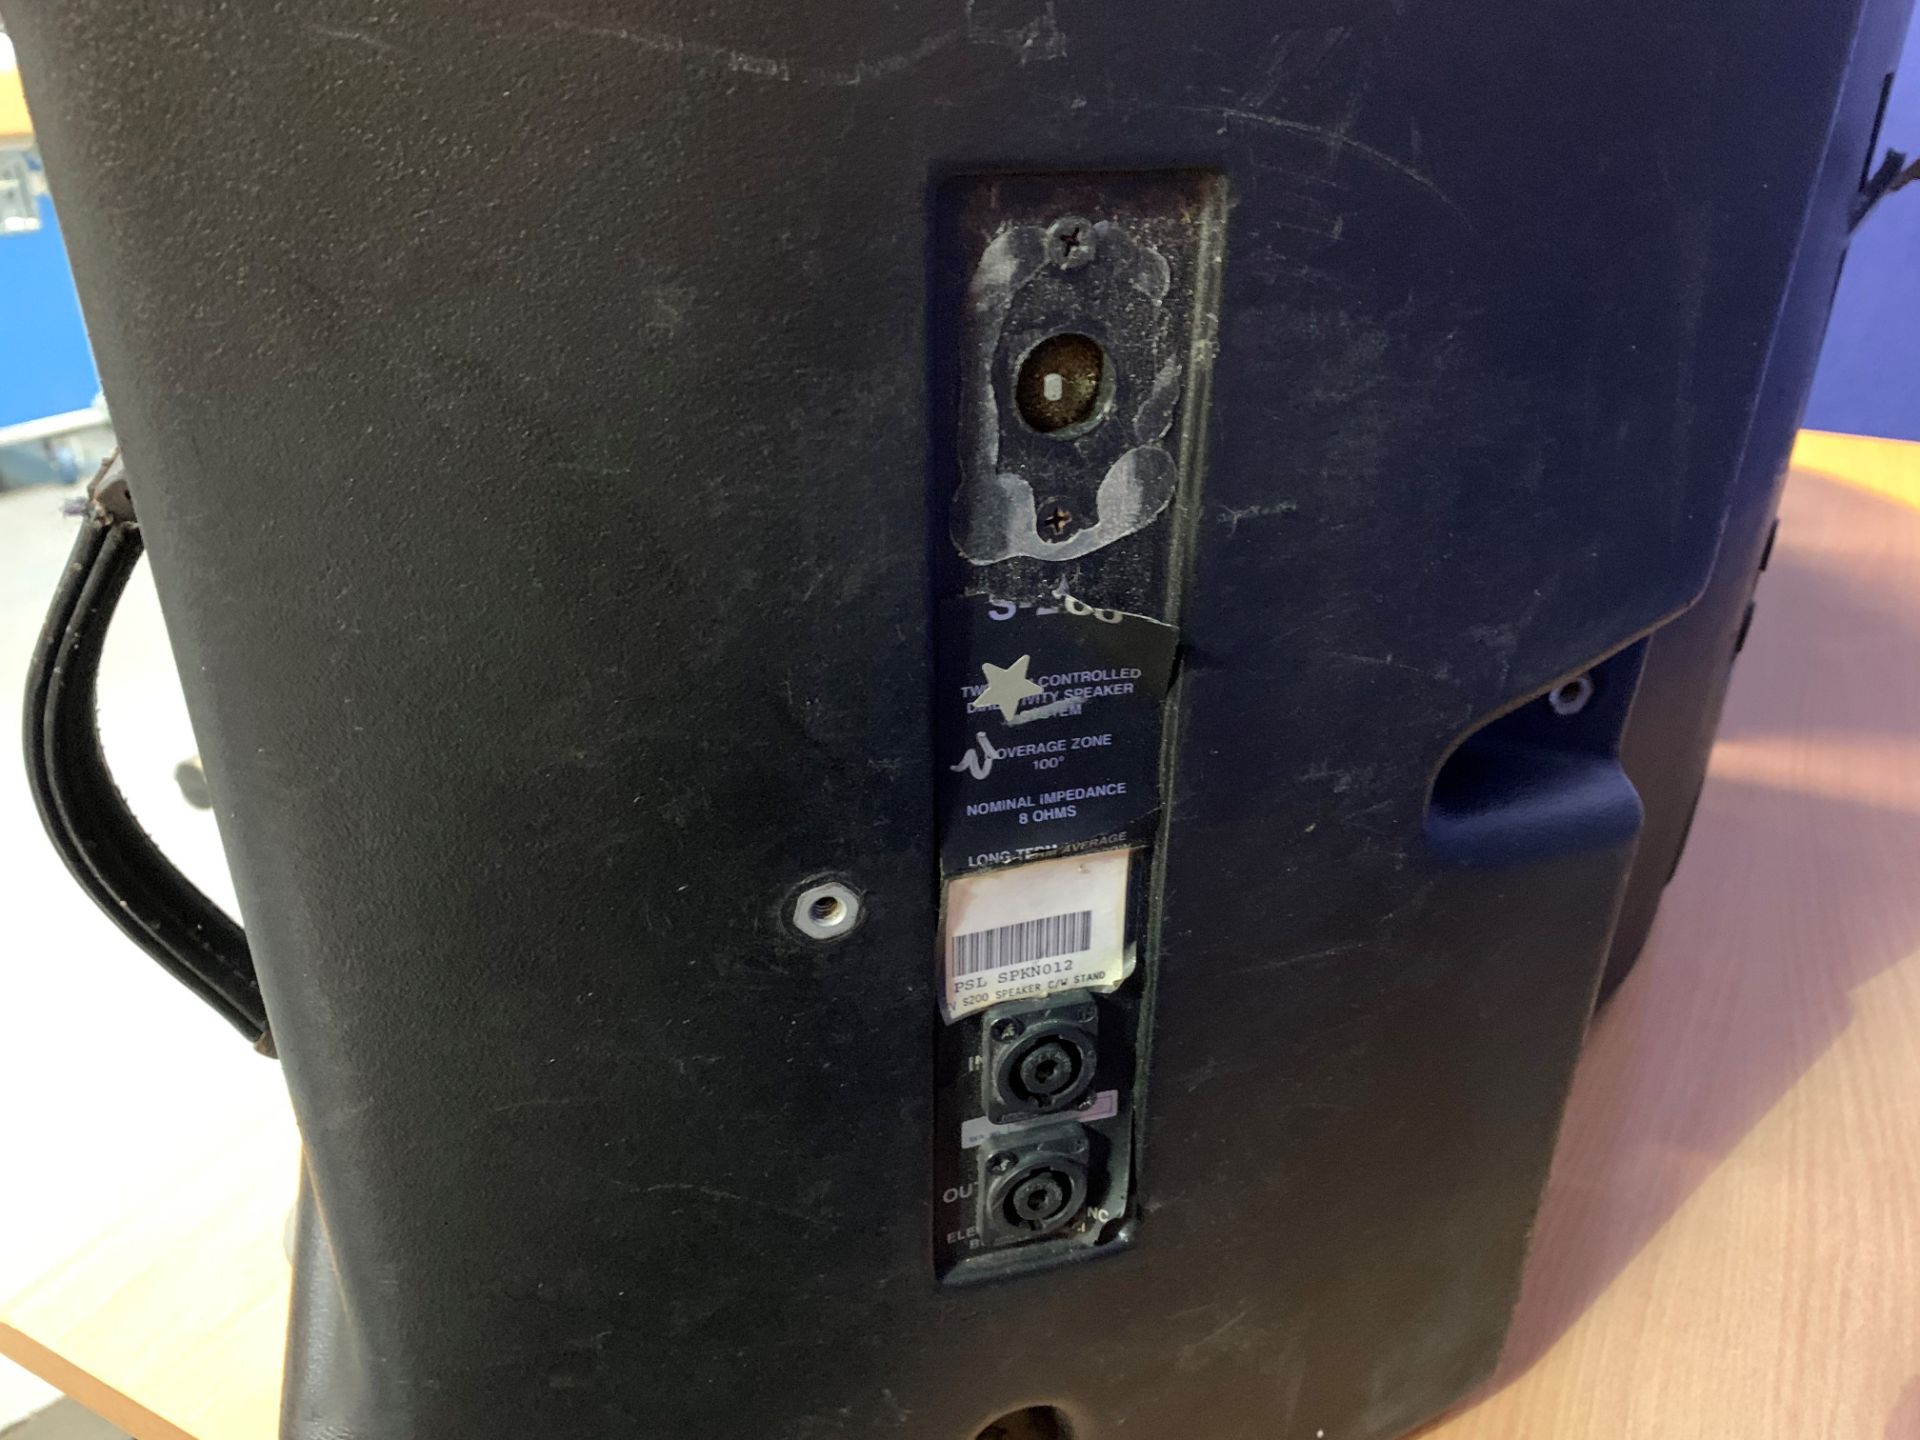 4 x EVS200 Speakers - 2 In Flightcase 2 in Bags c/w 4 Stands - Image 3 of 4